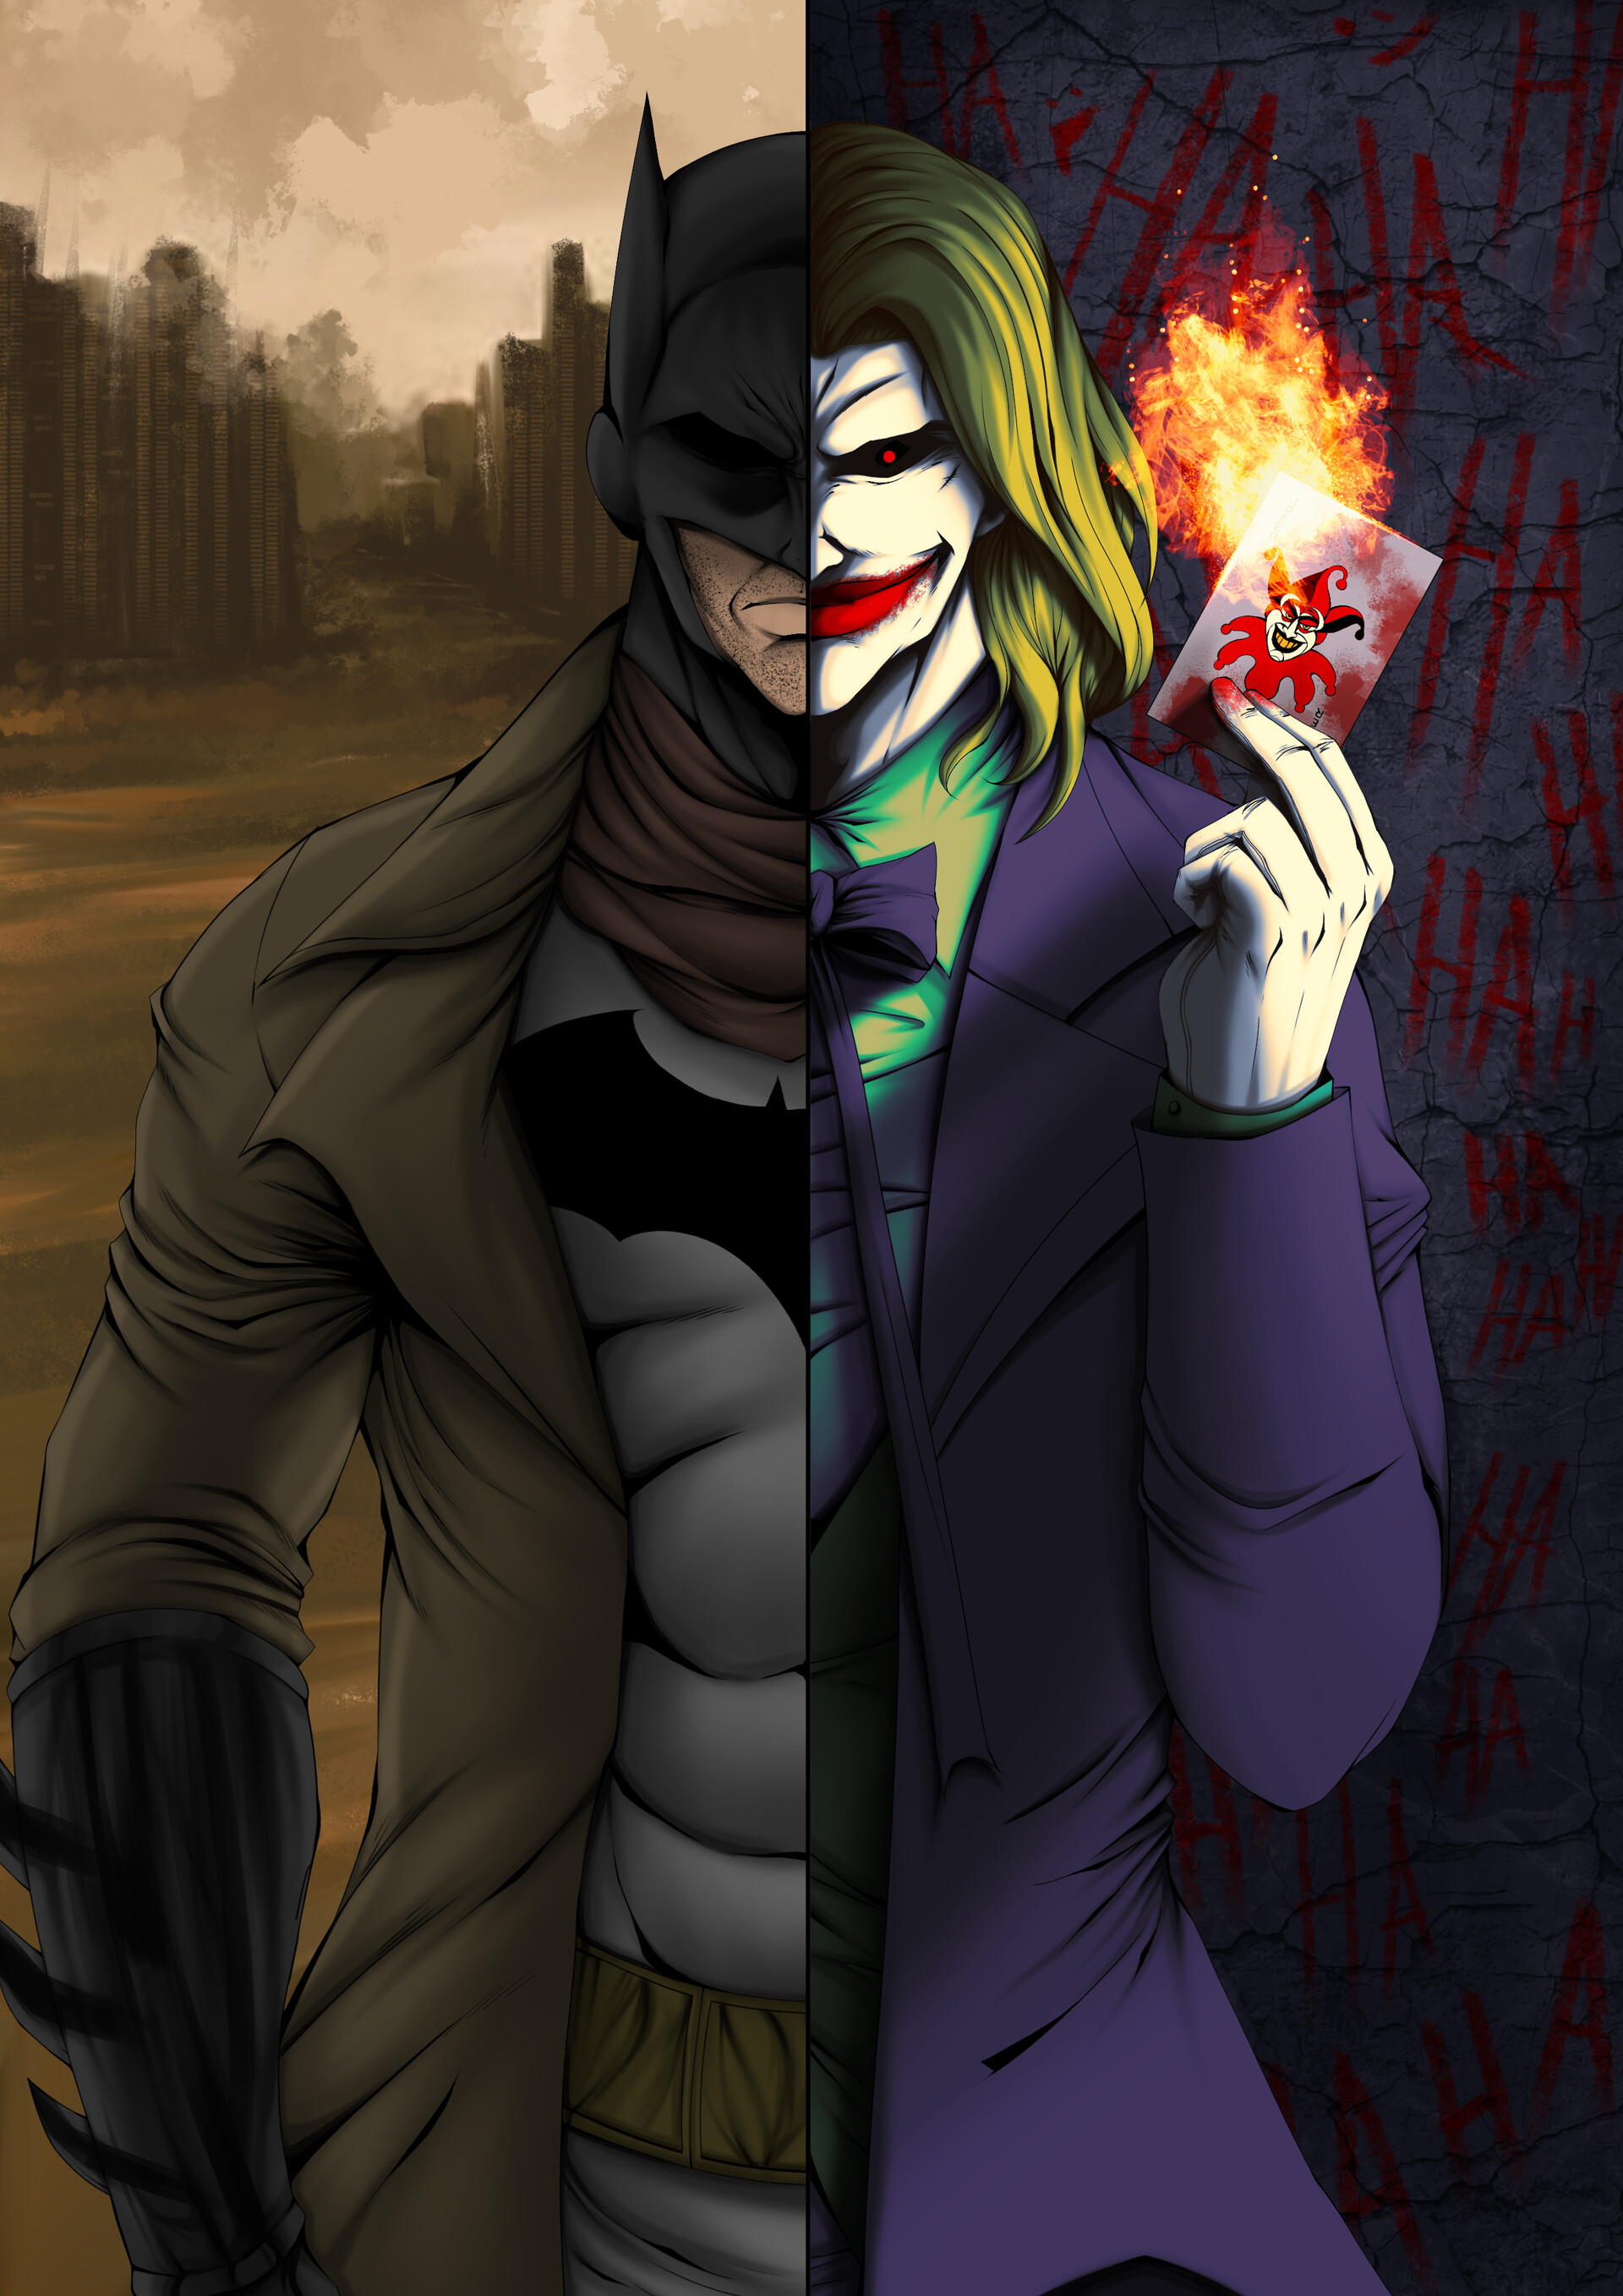 ArtStation - Batman vs Joker